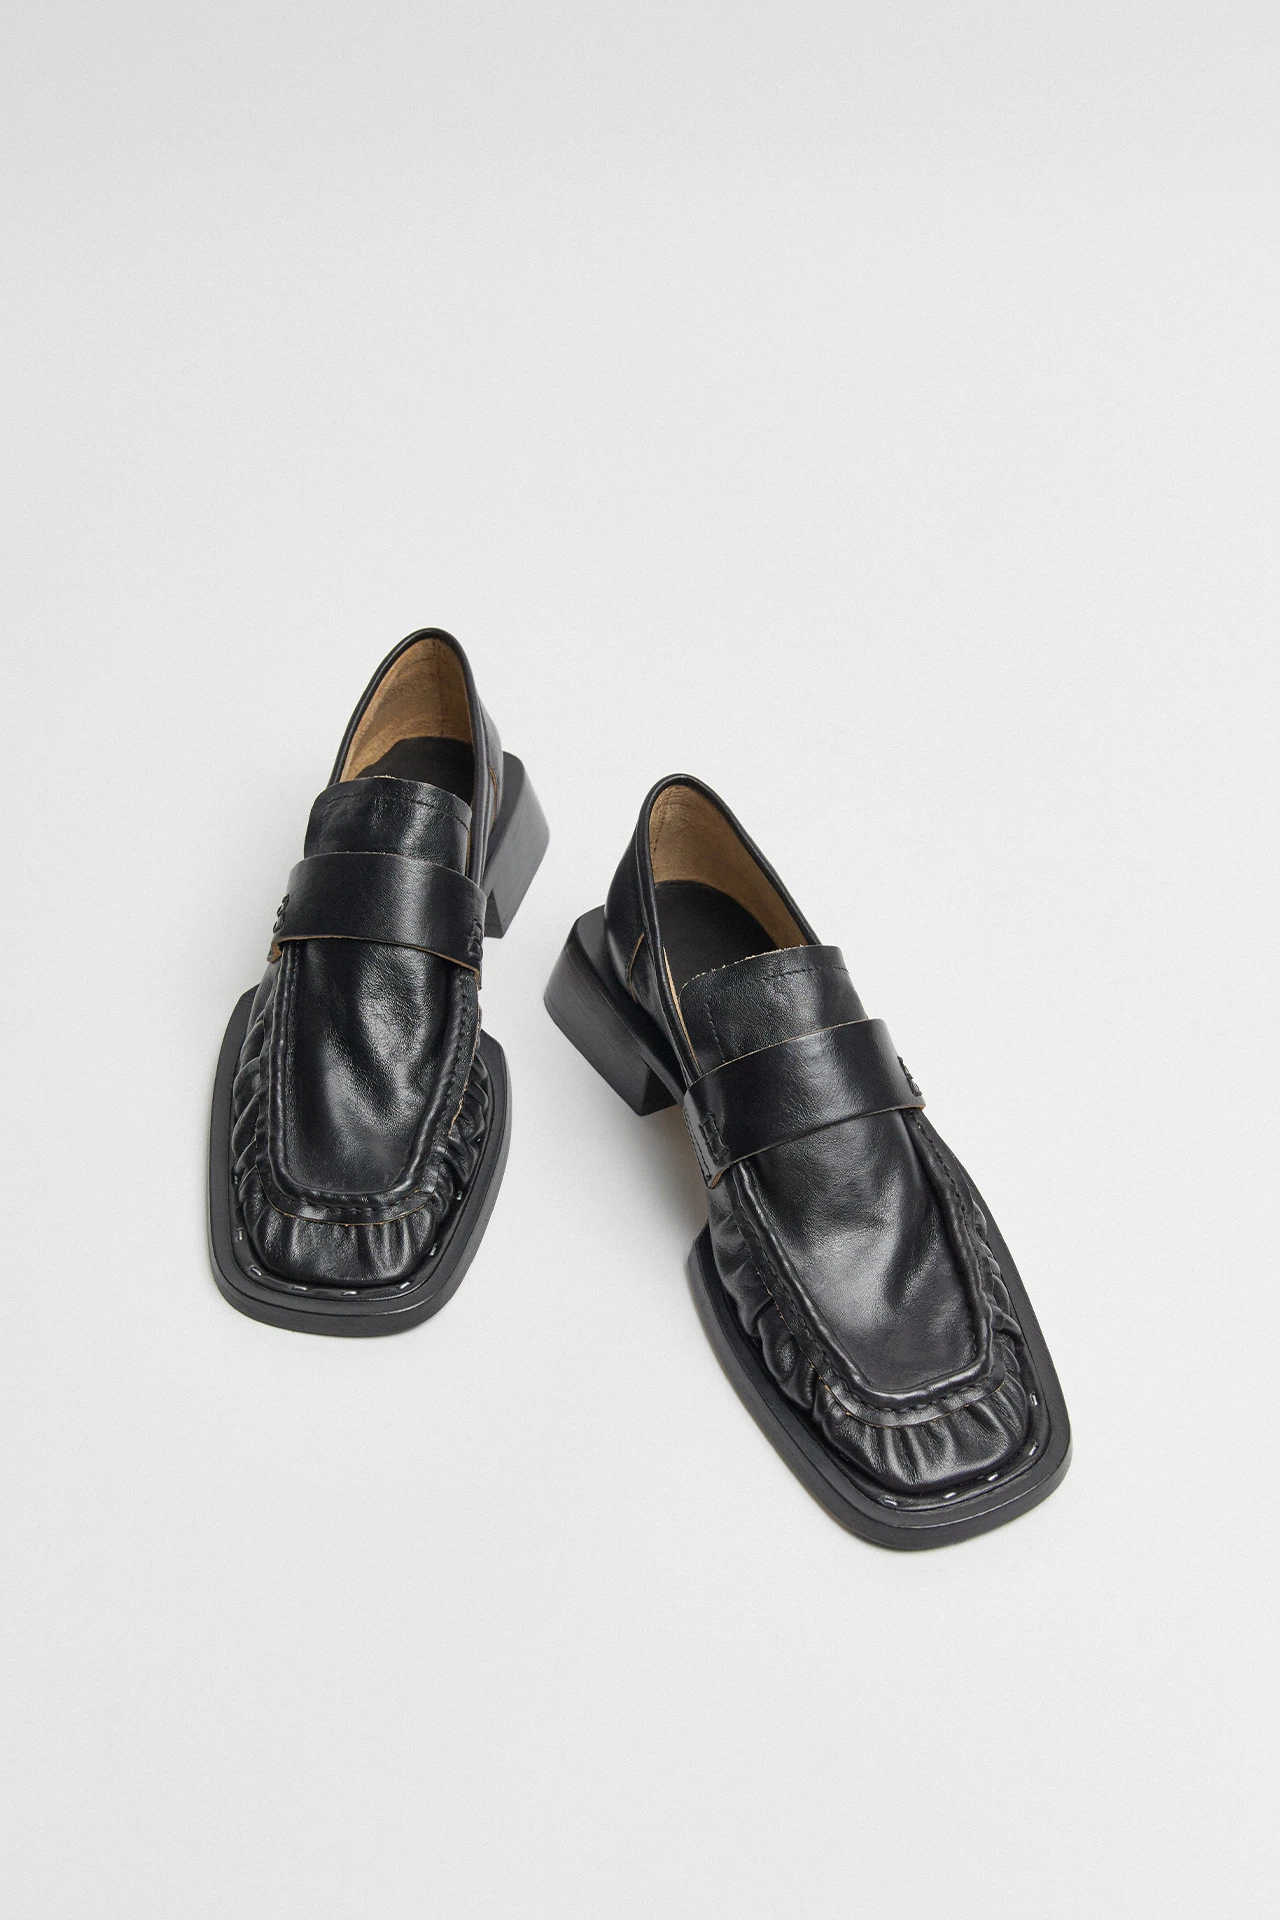 Miista-airi-black-loafers-04